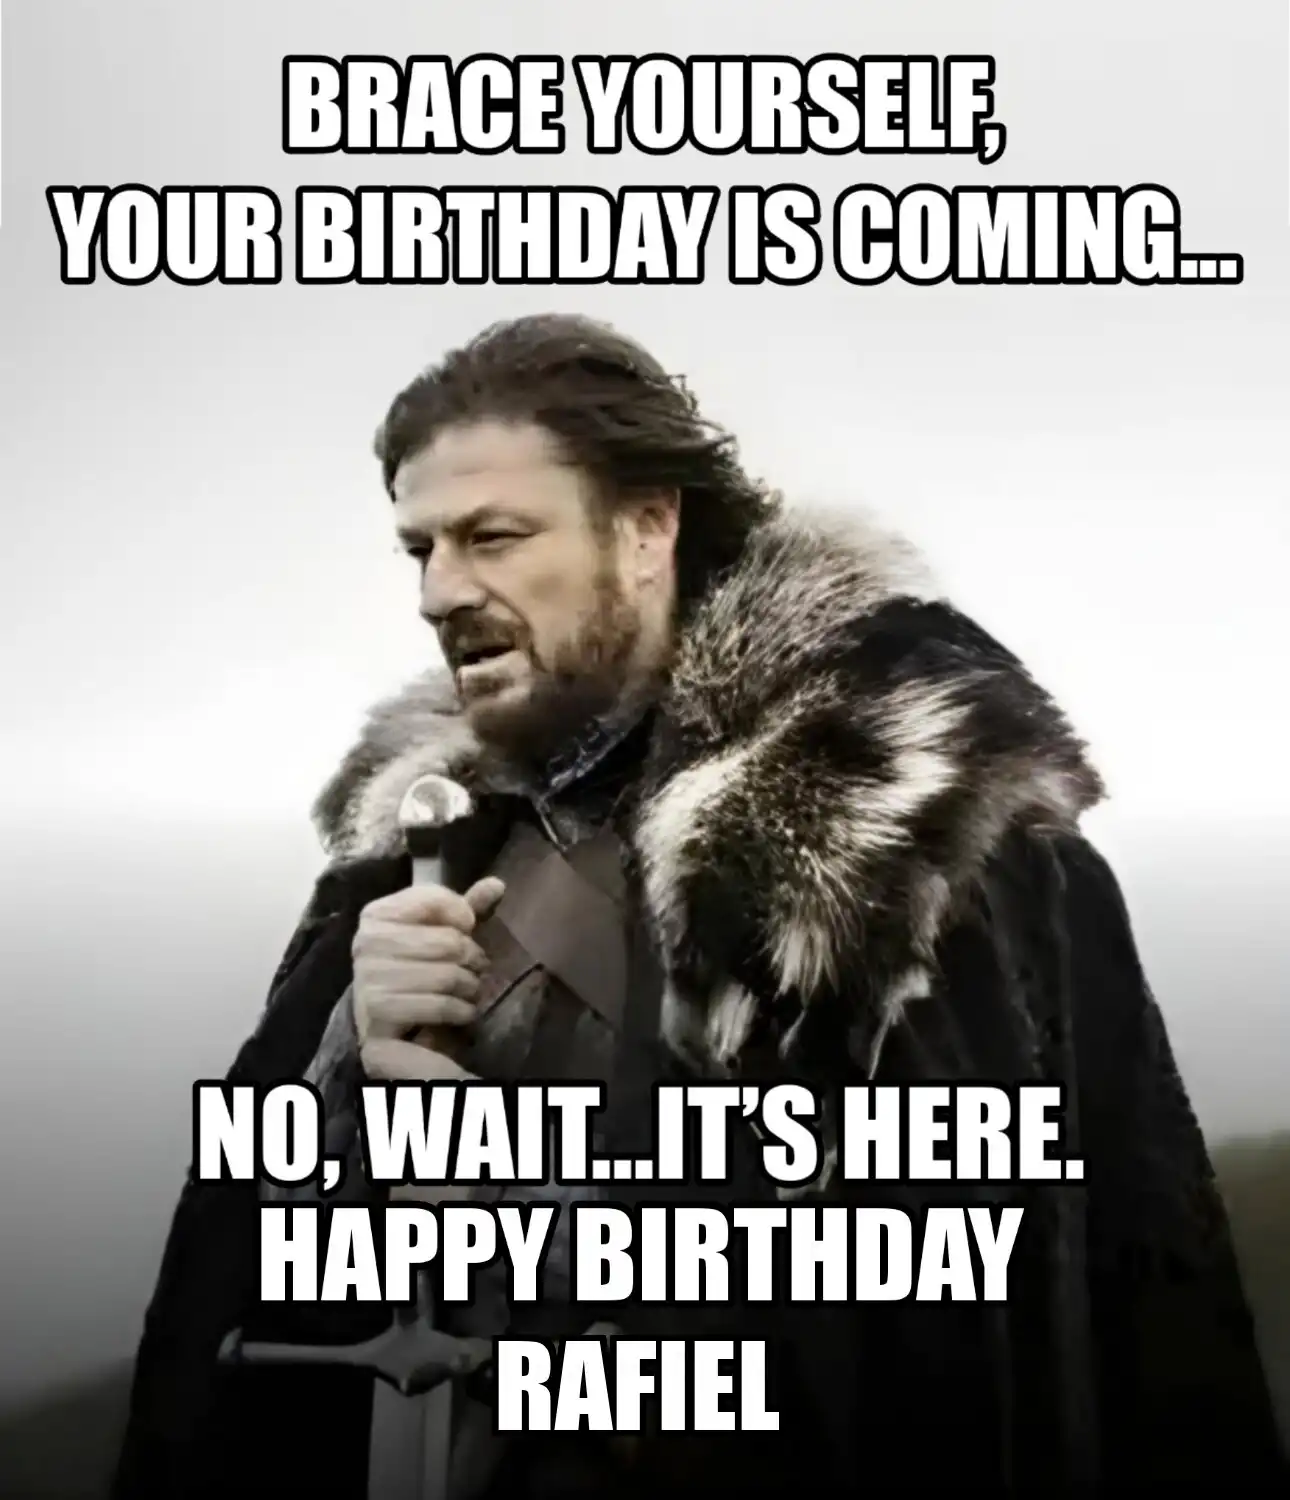 Happy Birthday Rafiel Brace Yourself Your Birthday Is Coming Meme